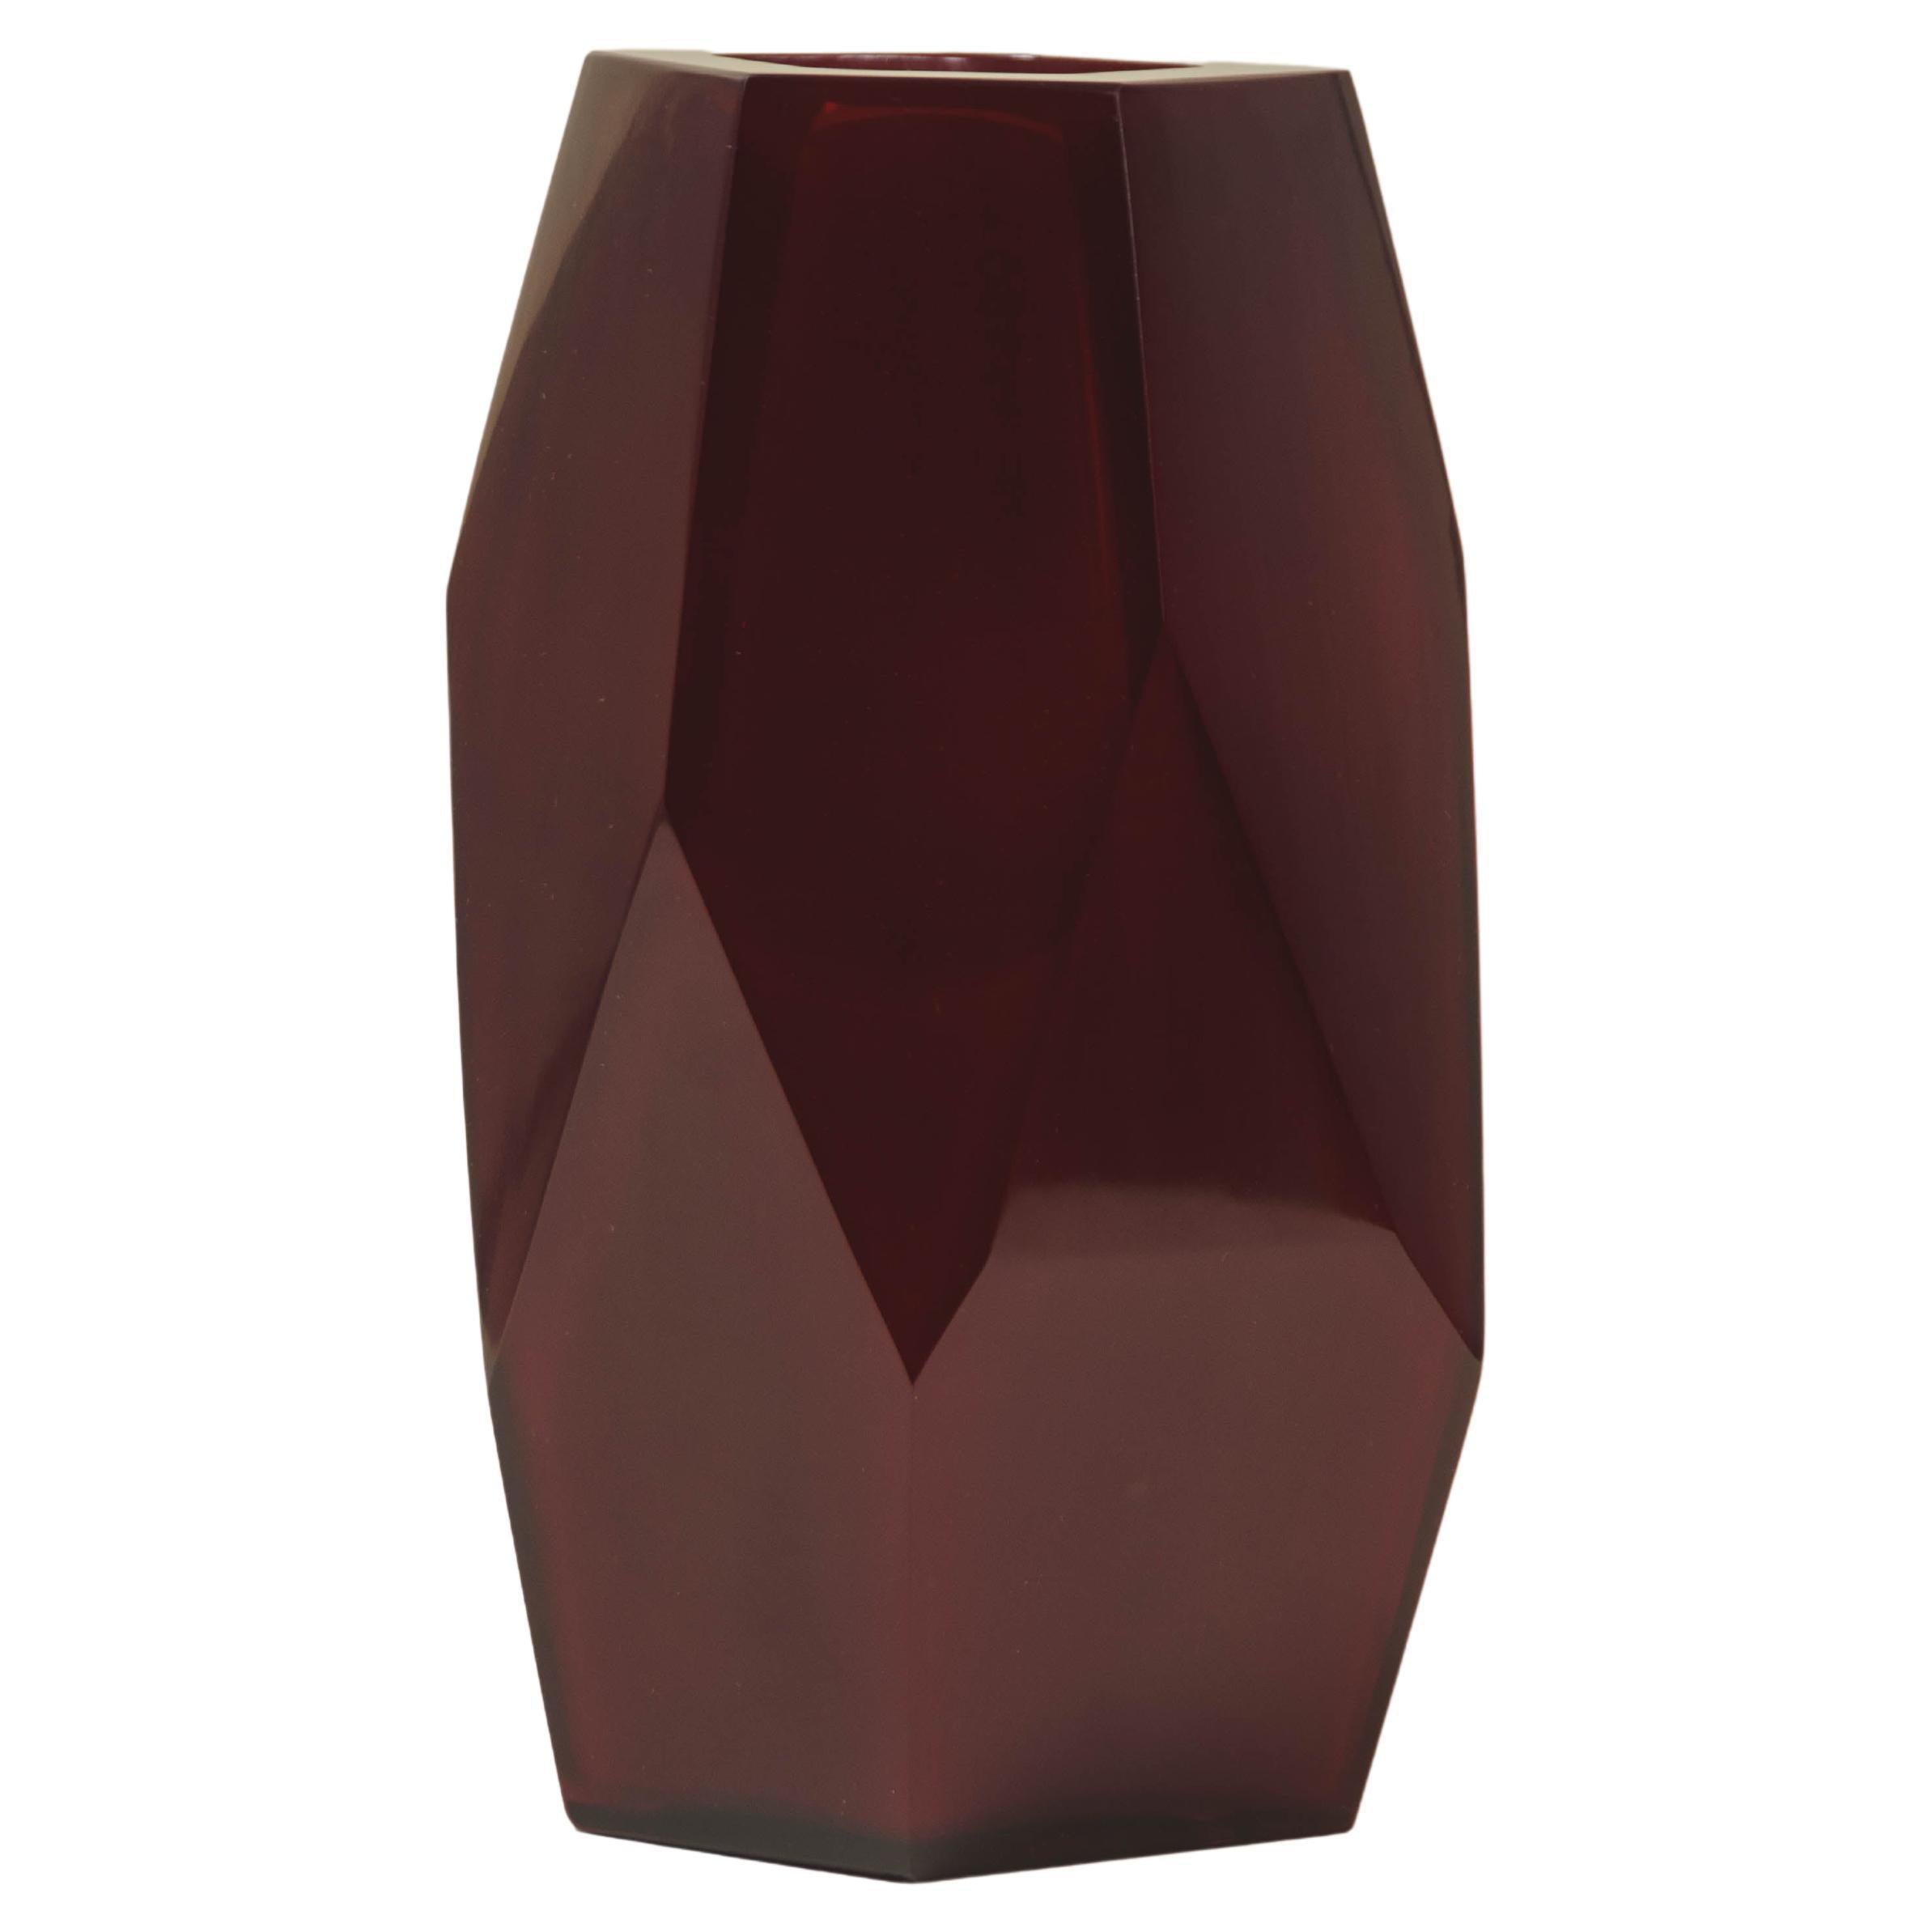 Vase contemporain Grand Facet en verre pékinois framboise de Robert Kuo